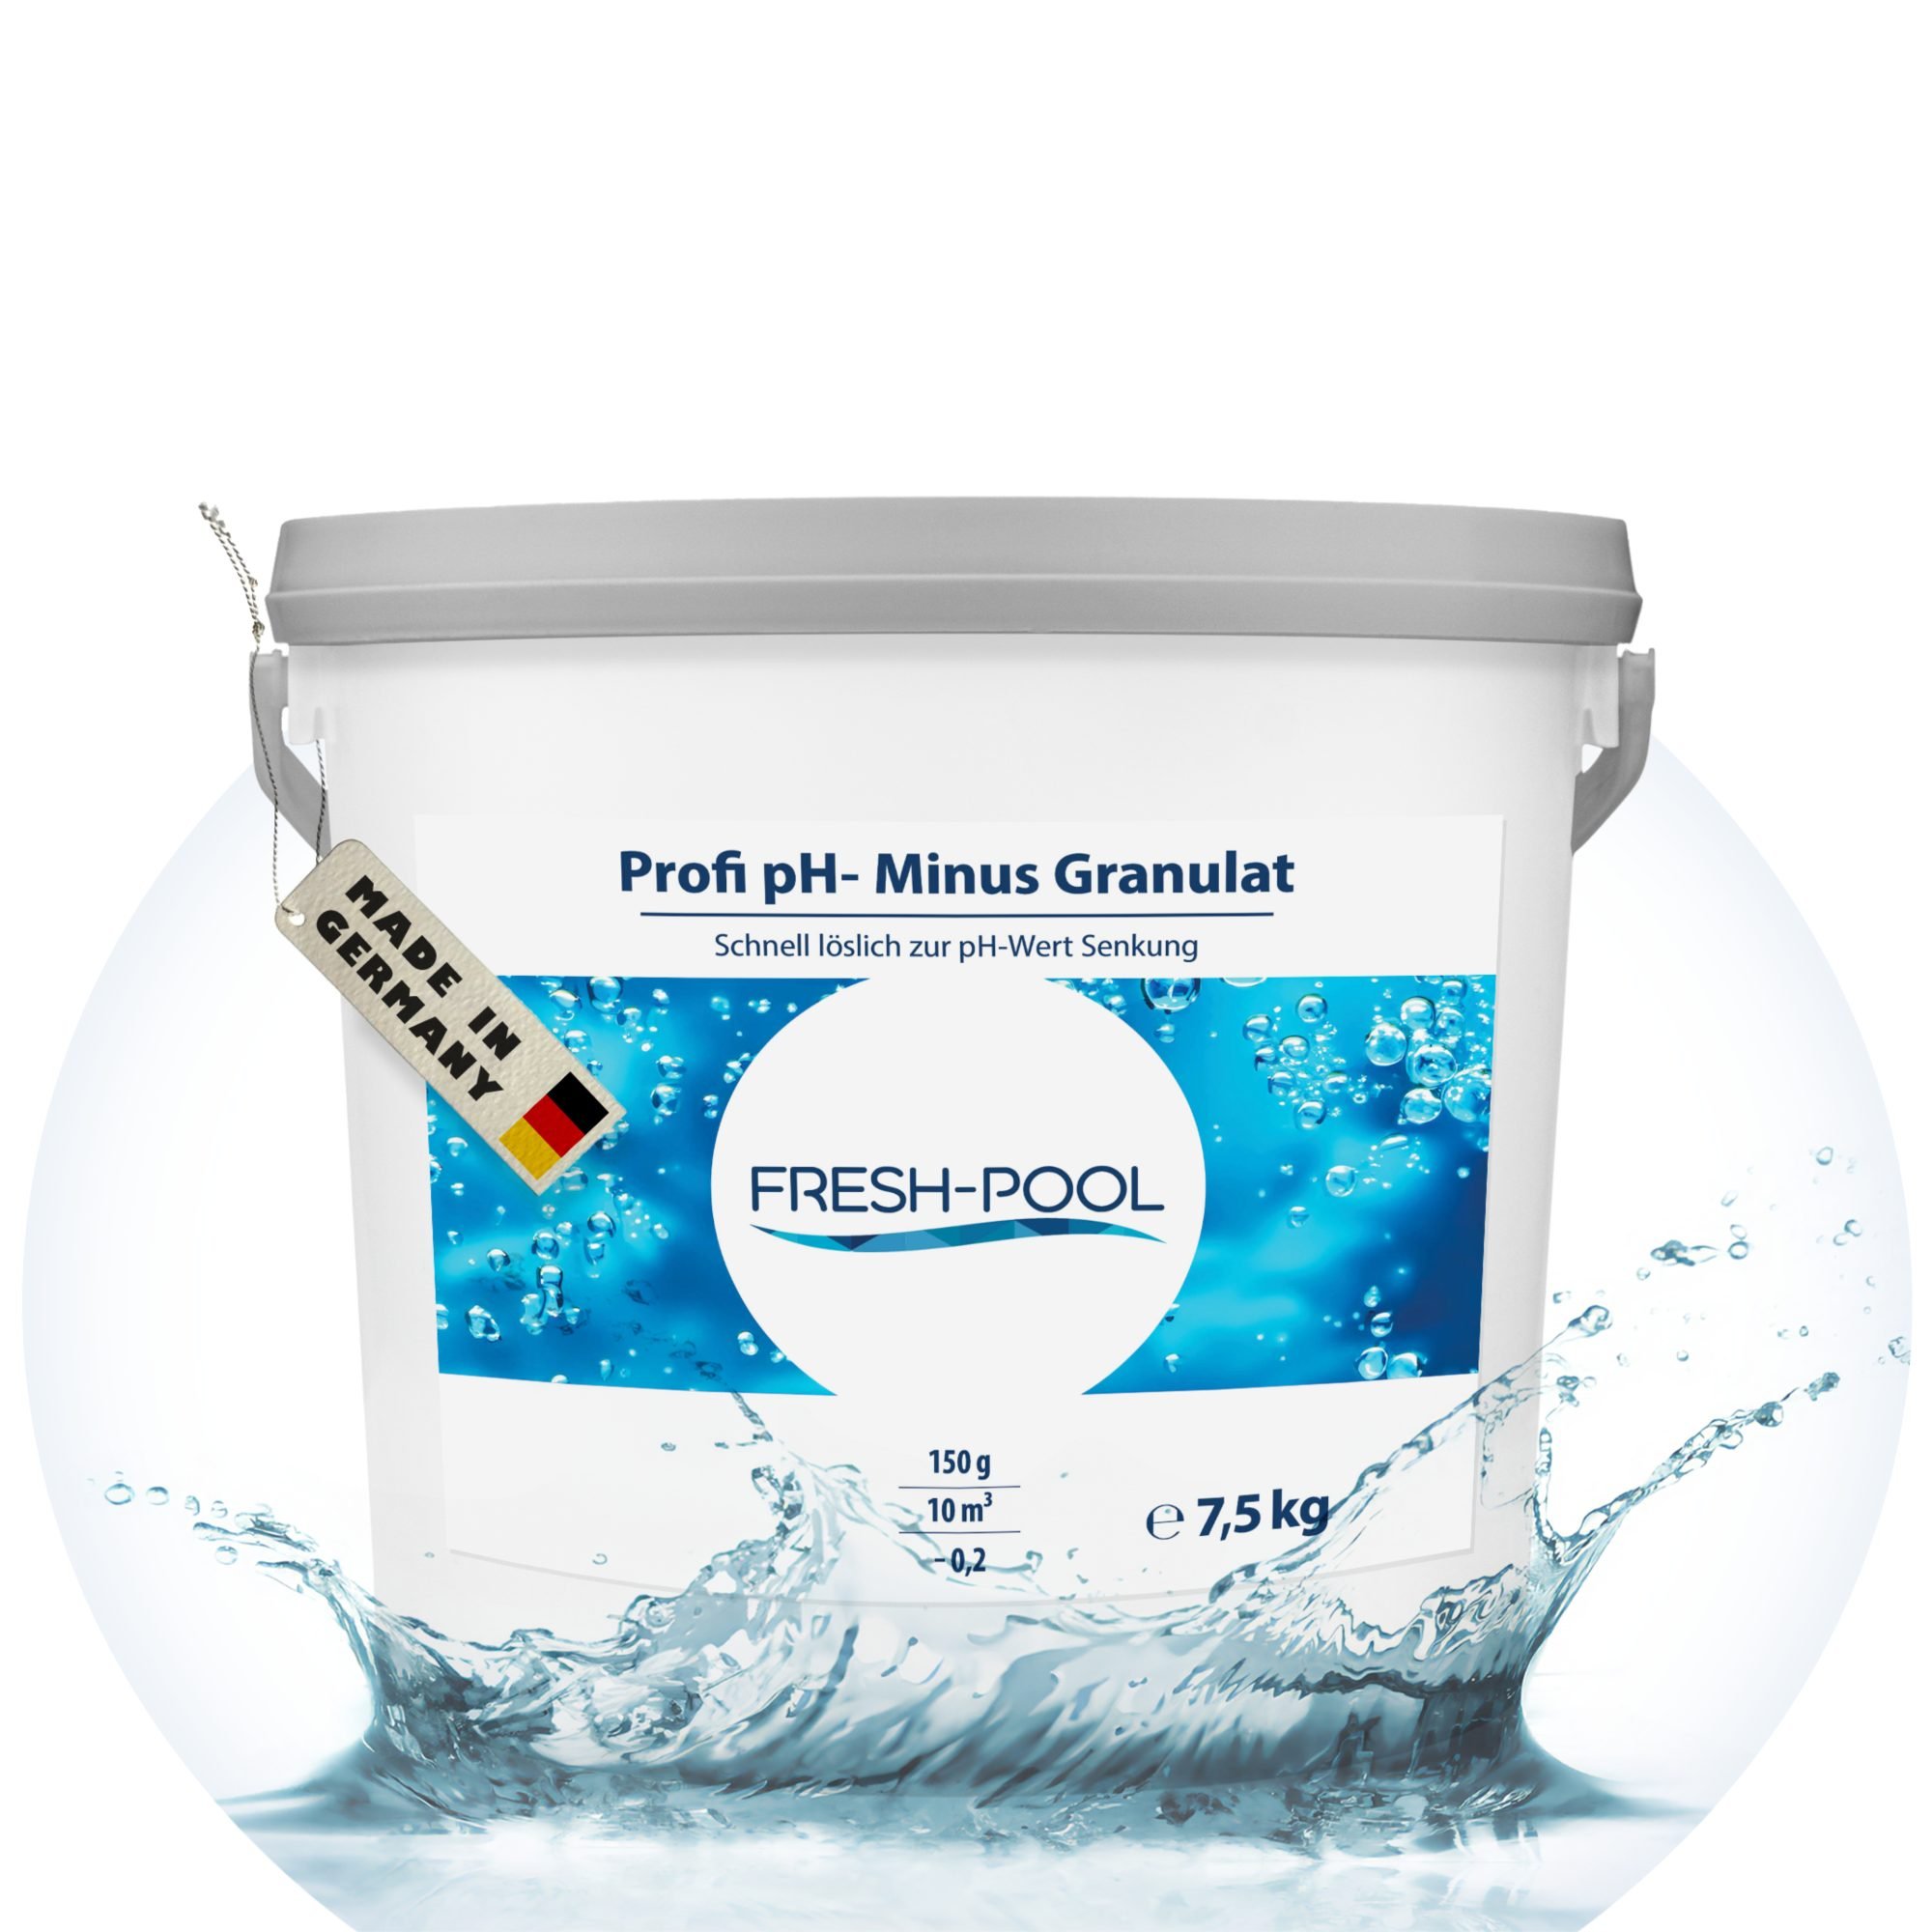 Fresh-Pool Profi pH- Minus Granulat 7,5 kg